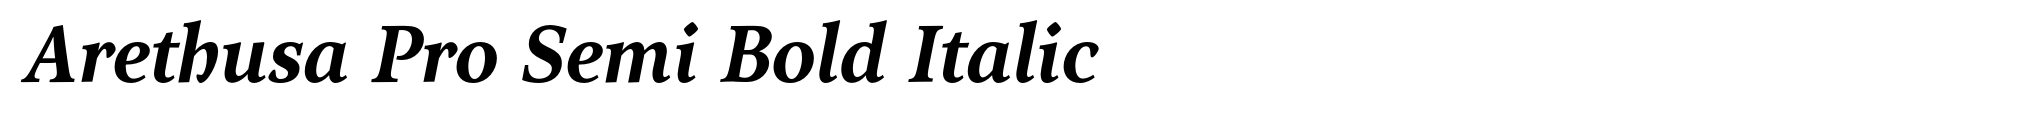 Arethusa Pro Semi Bold Italic image